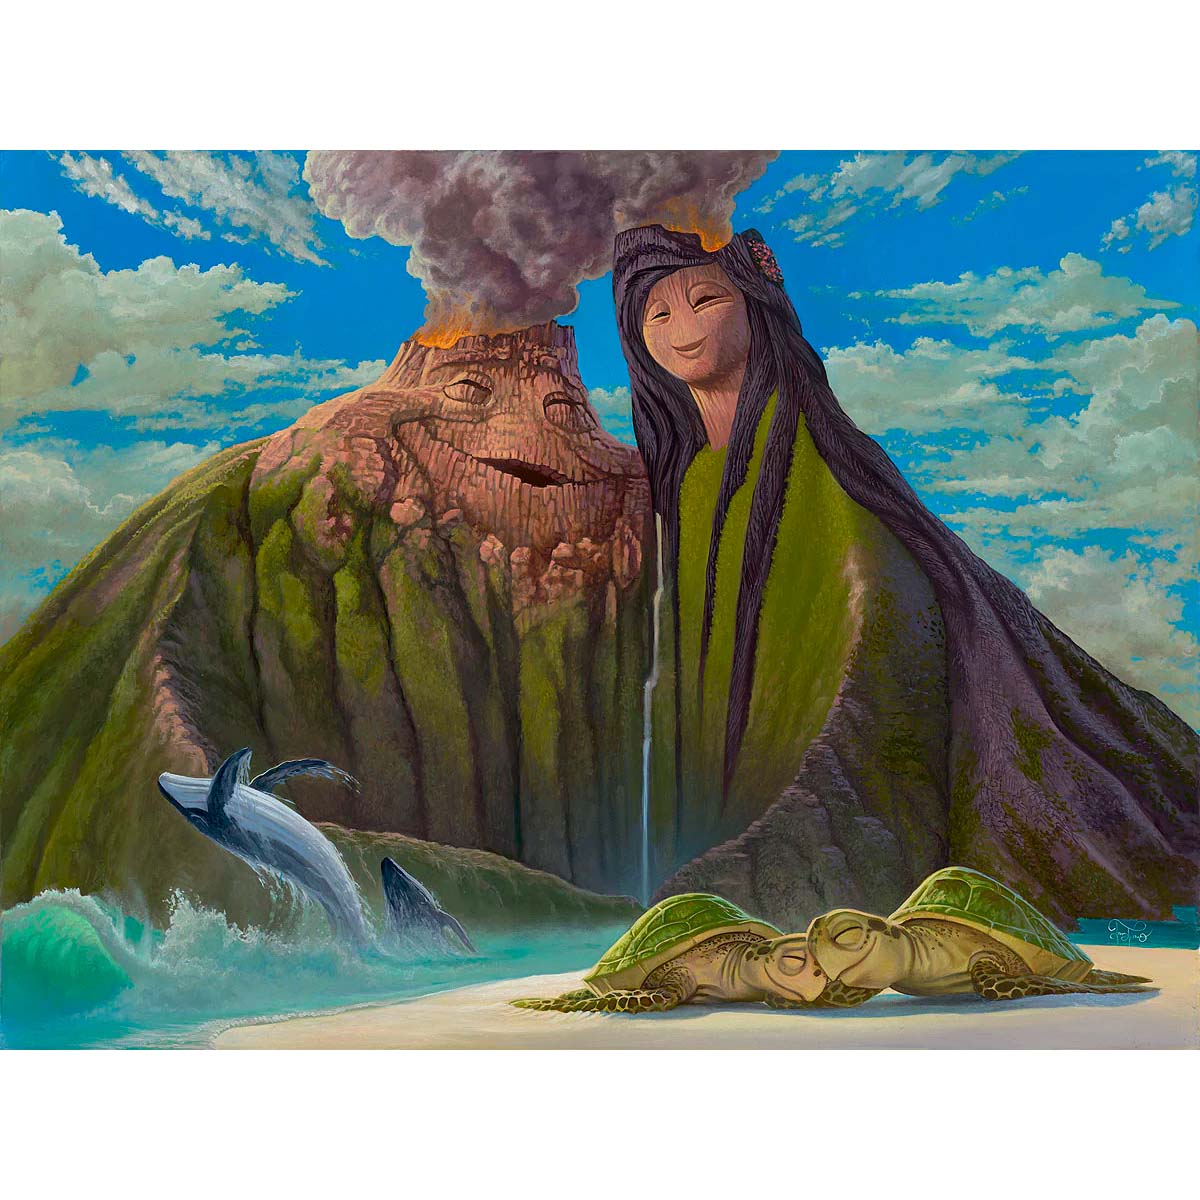 Jared Franco Disney "I Lava You" Limited Edition Canvas Giclee